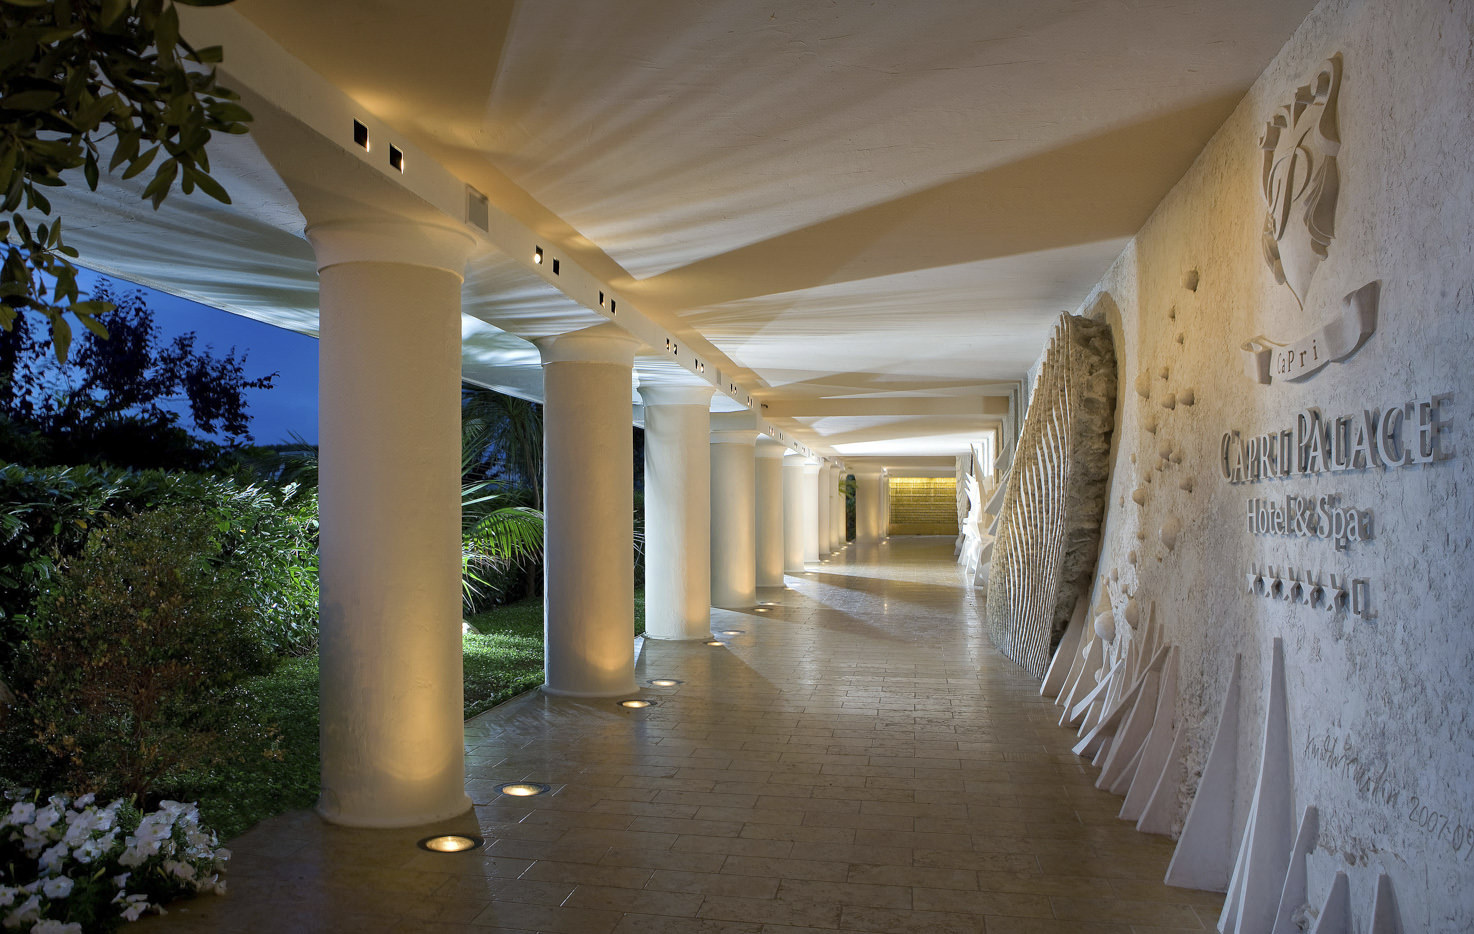 Entrance of Capri Palace Hotel